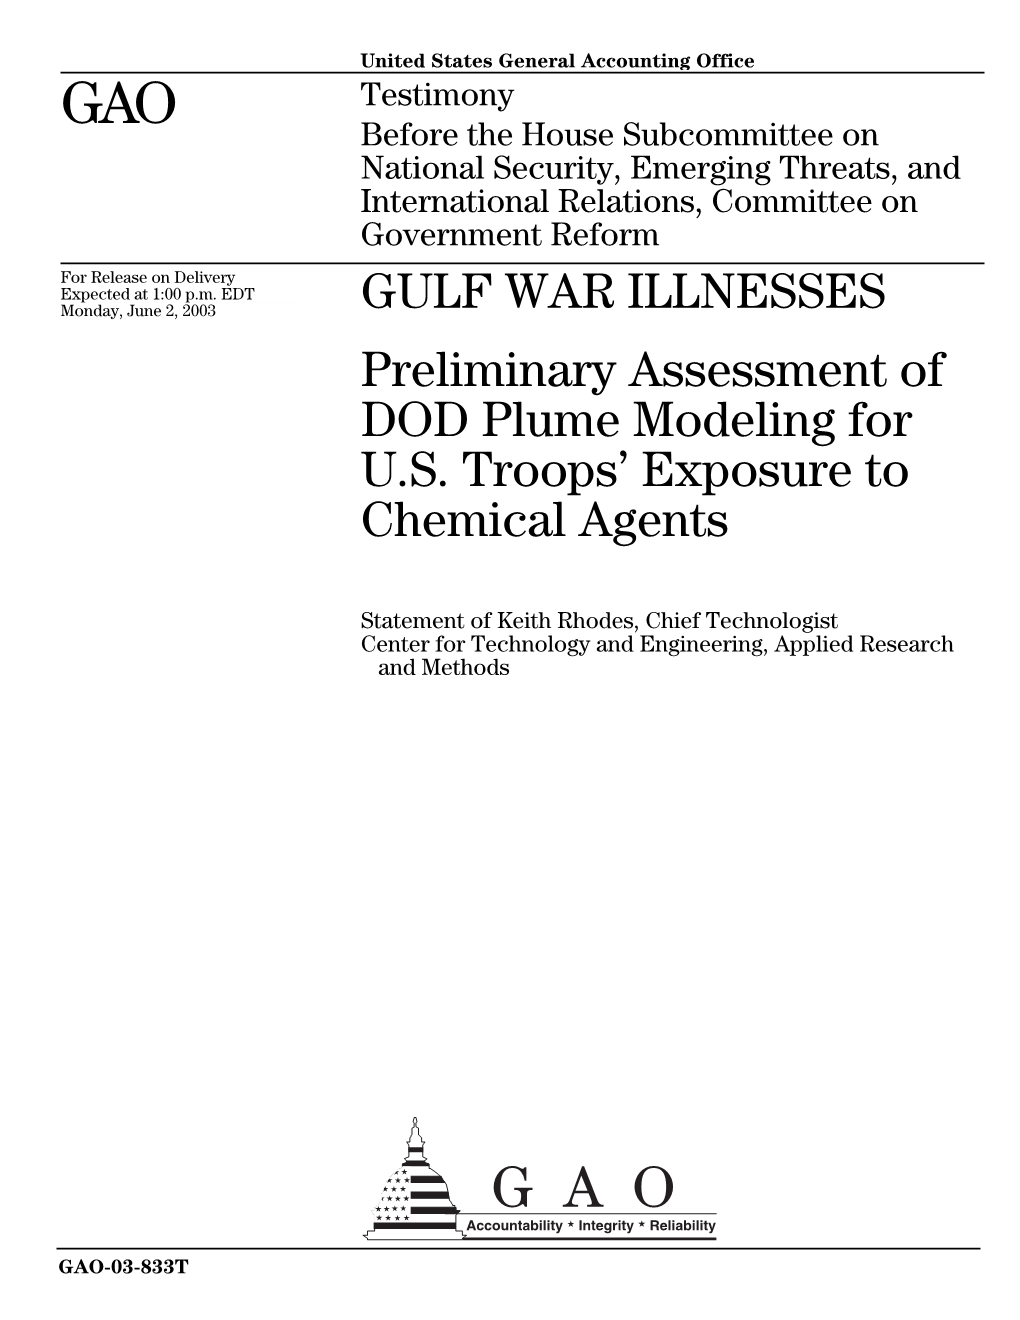 GAO-03-833T Gulf War Illnesses: Preliminary Assessment of DOD